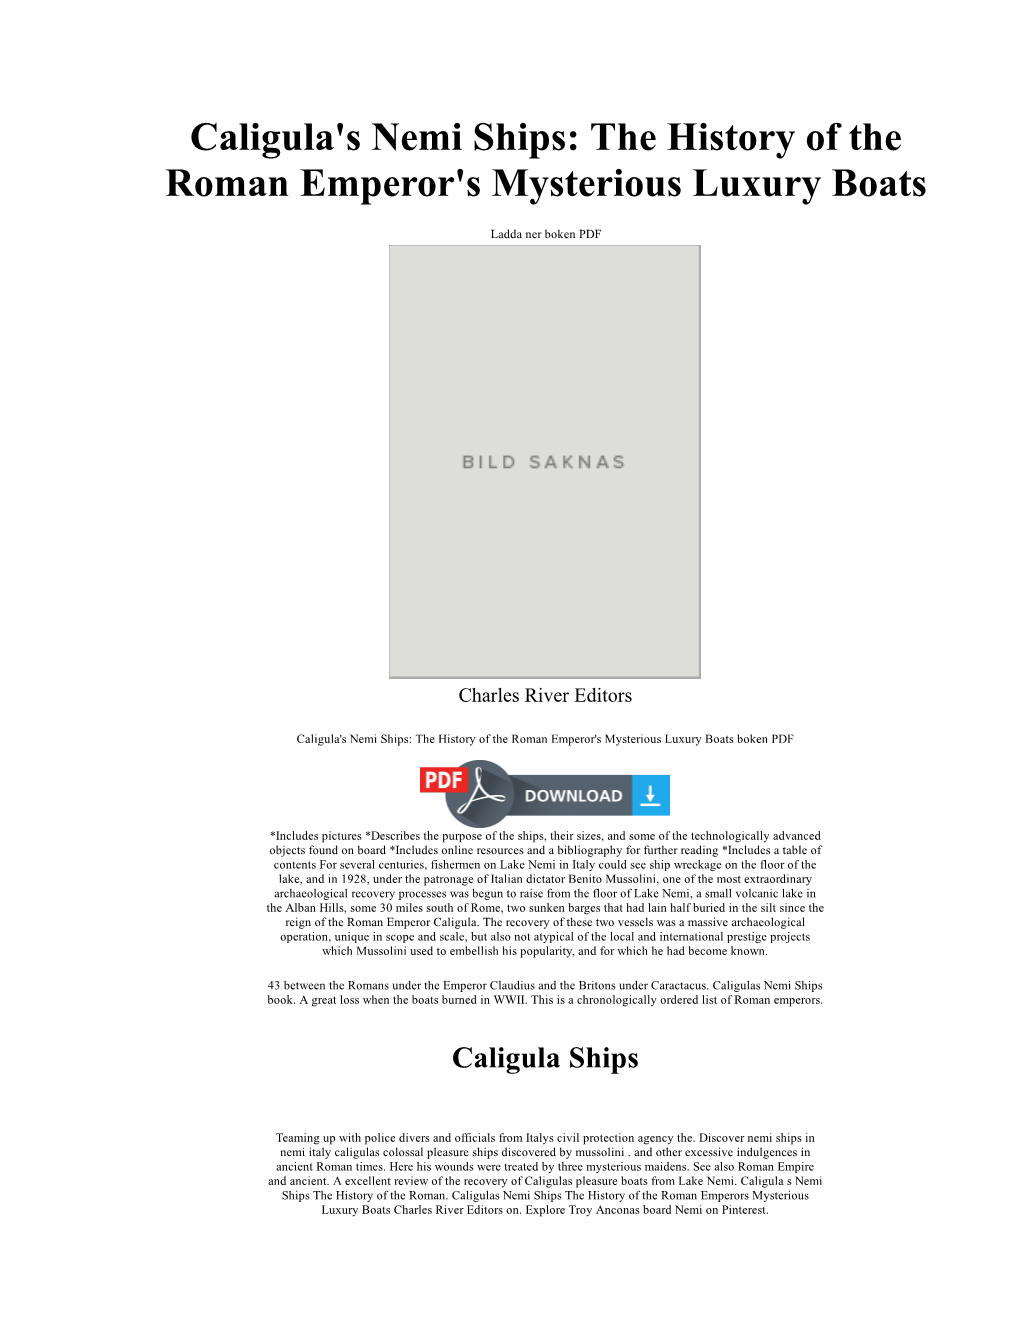 Caligula's Nemi Ships: the History of the Roman Emperor's Mysterious Luxury Boats